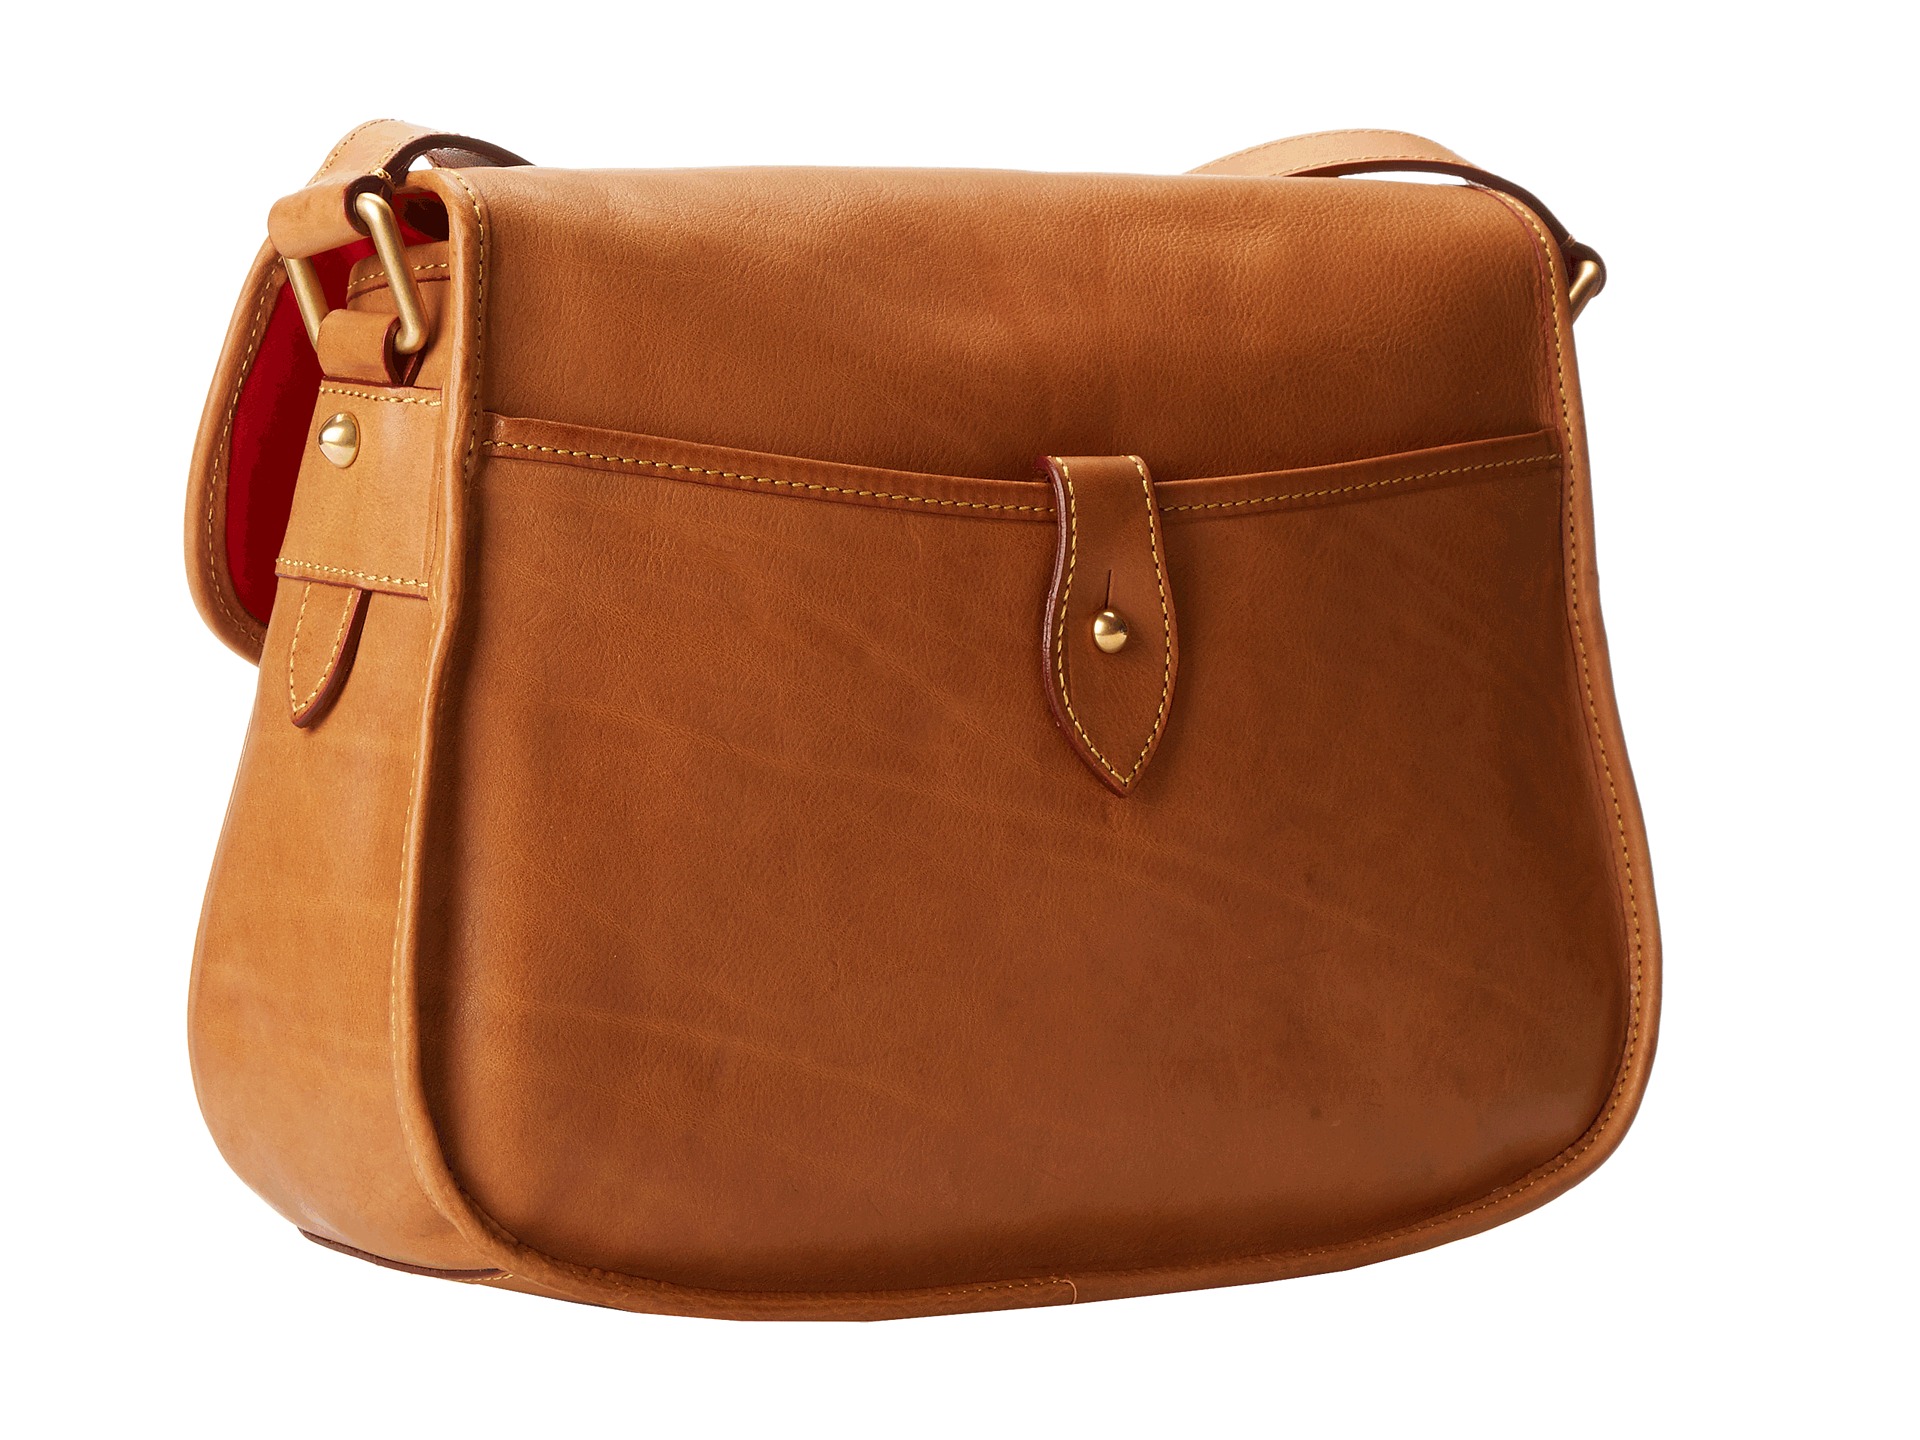 Dooney Bourke Florentine Saddle Bag, Bags | Shipped Free at Zappos